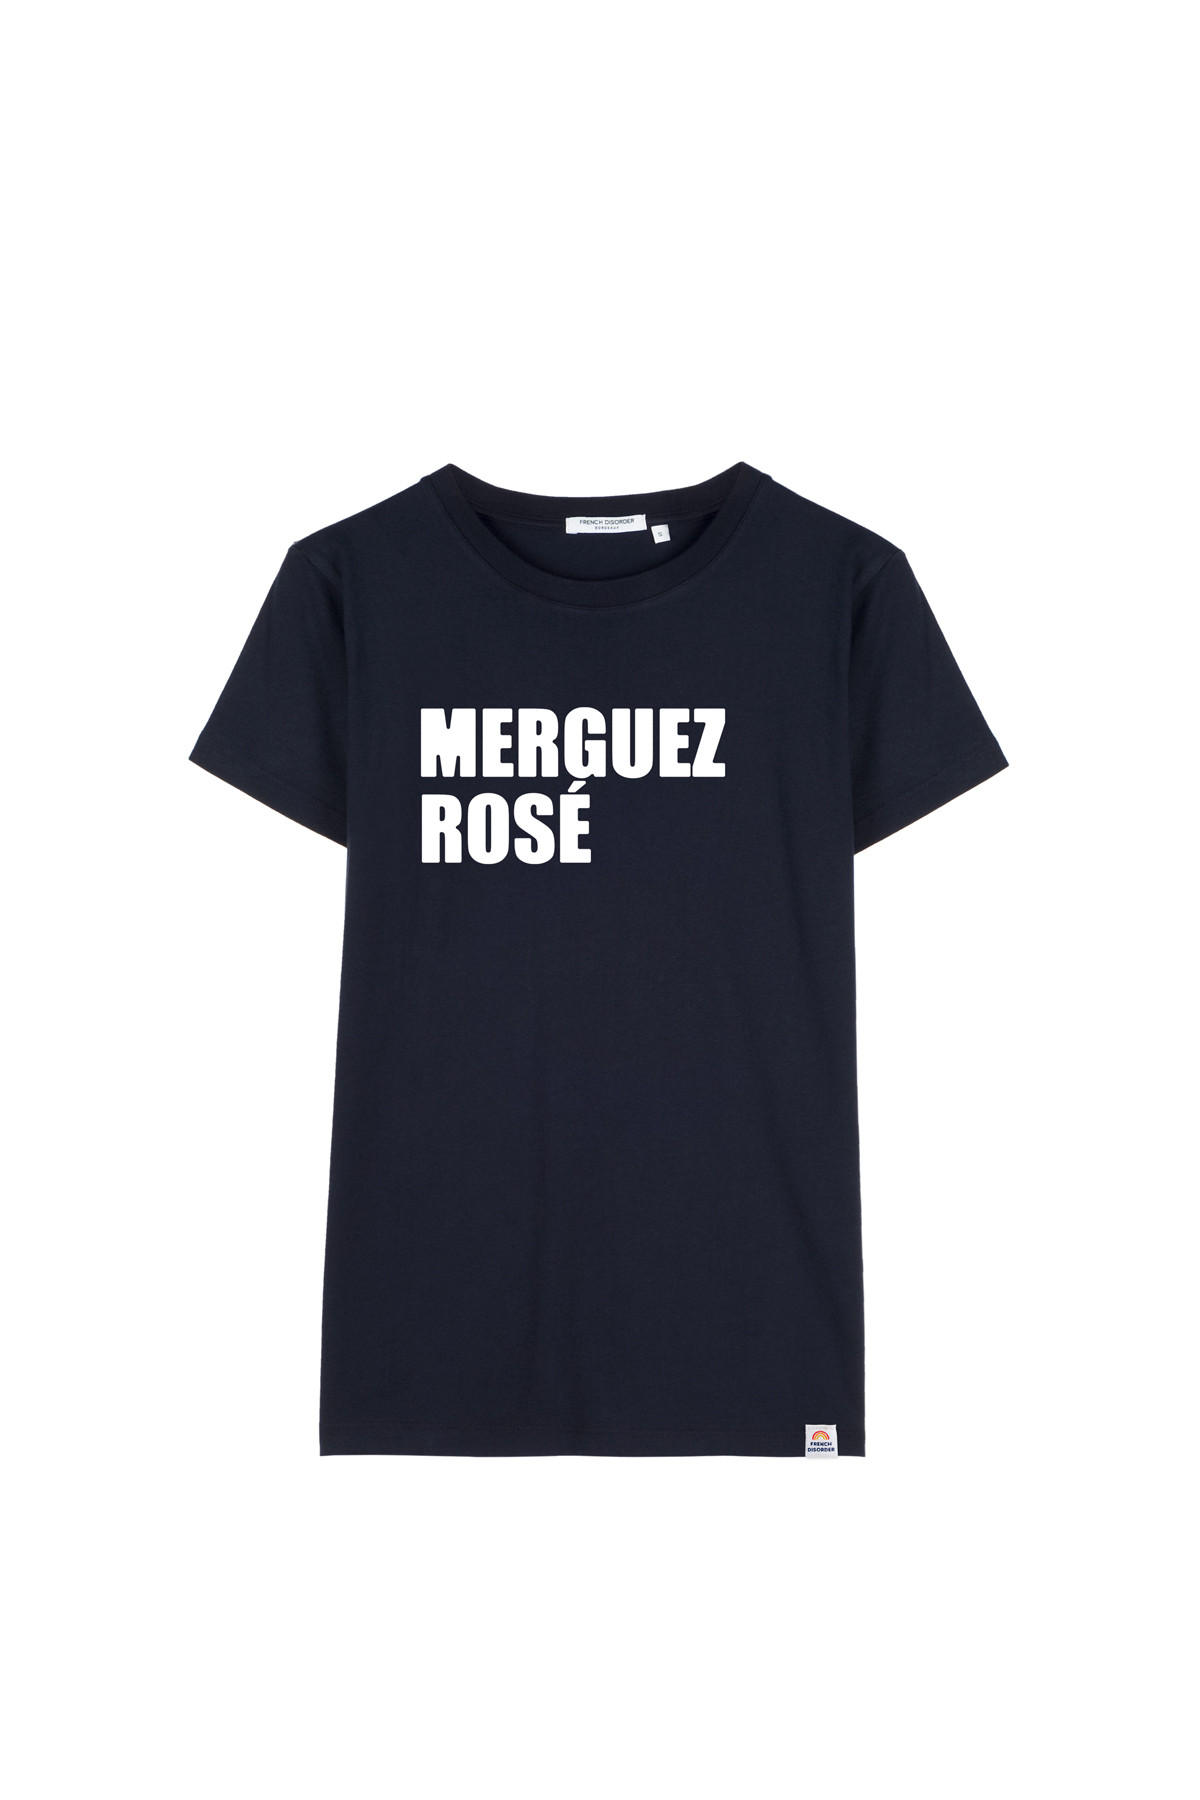 Tshirt MERGUEZ ROSE French Disorder